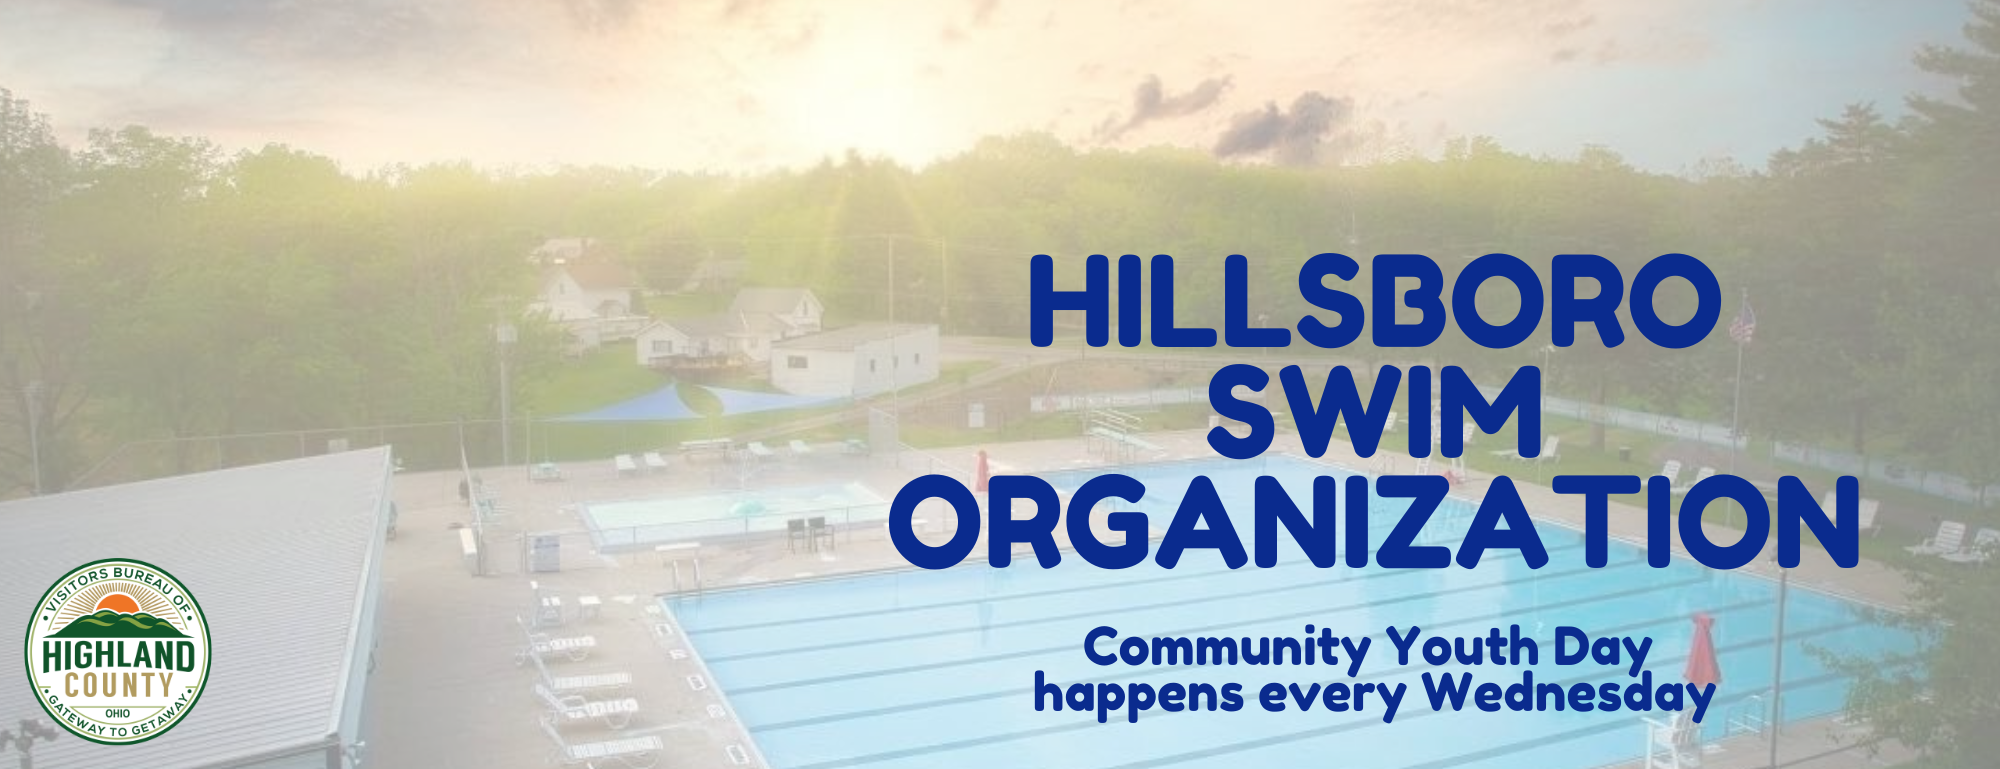 Hillsboro Swim Organization